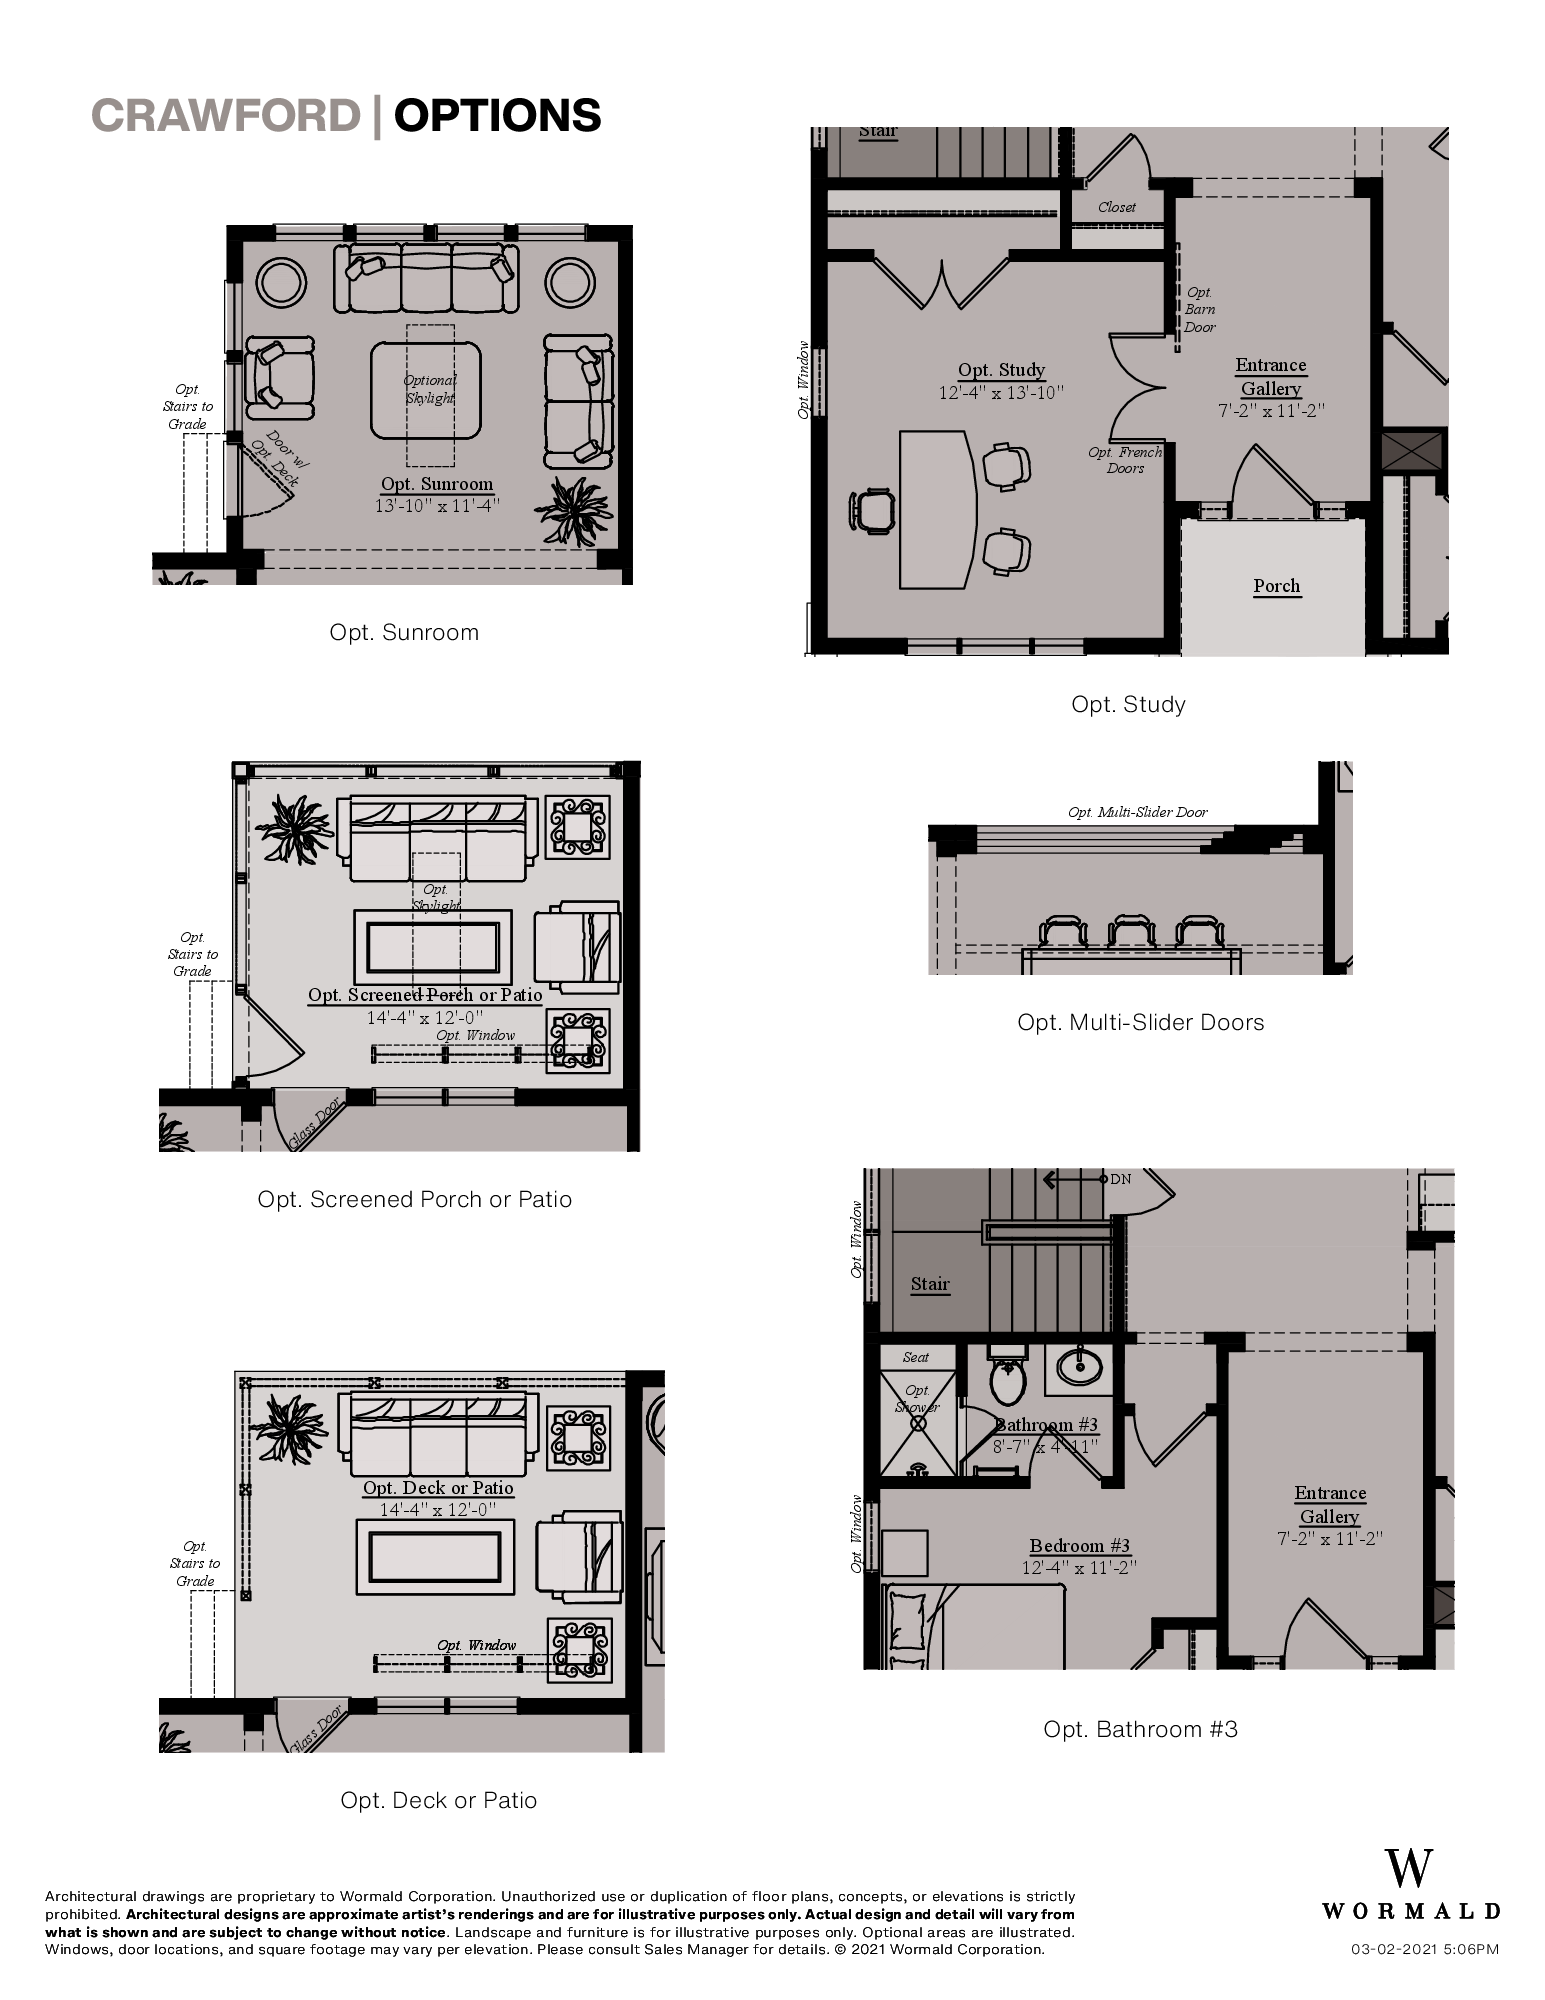 The Crawford floor plan 2